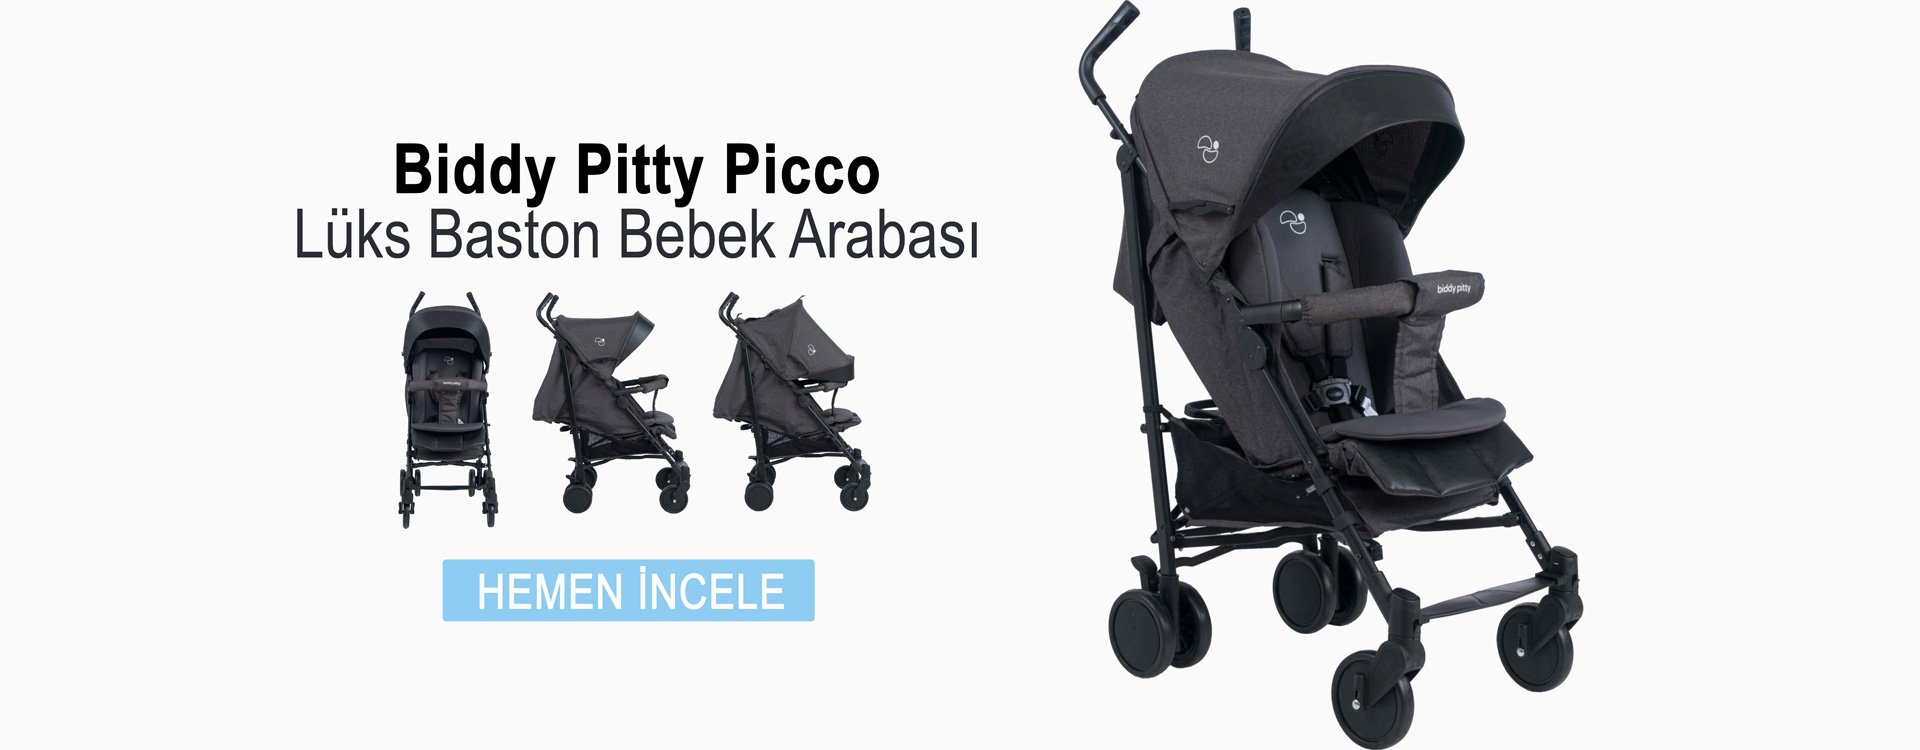 biddy pitty picco baston bebek arabası